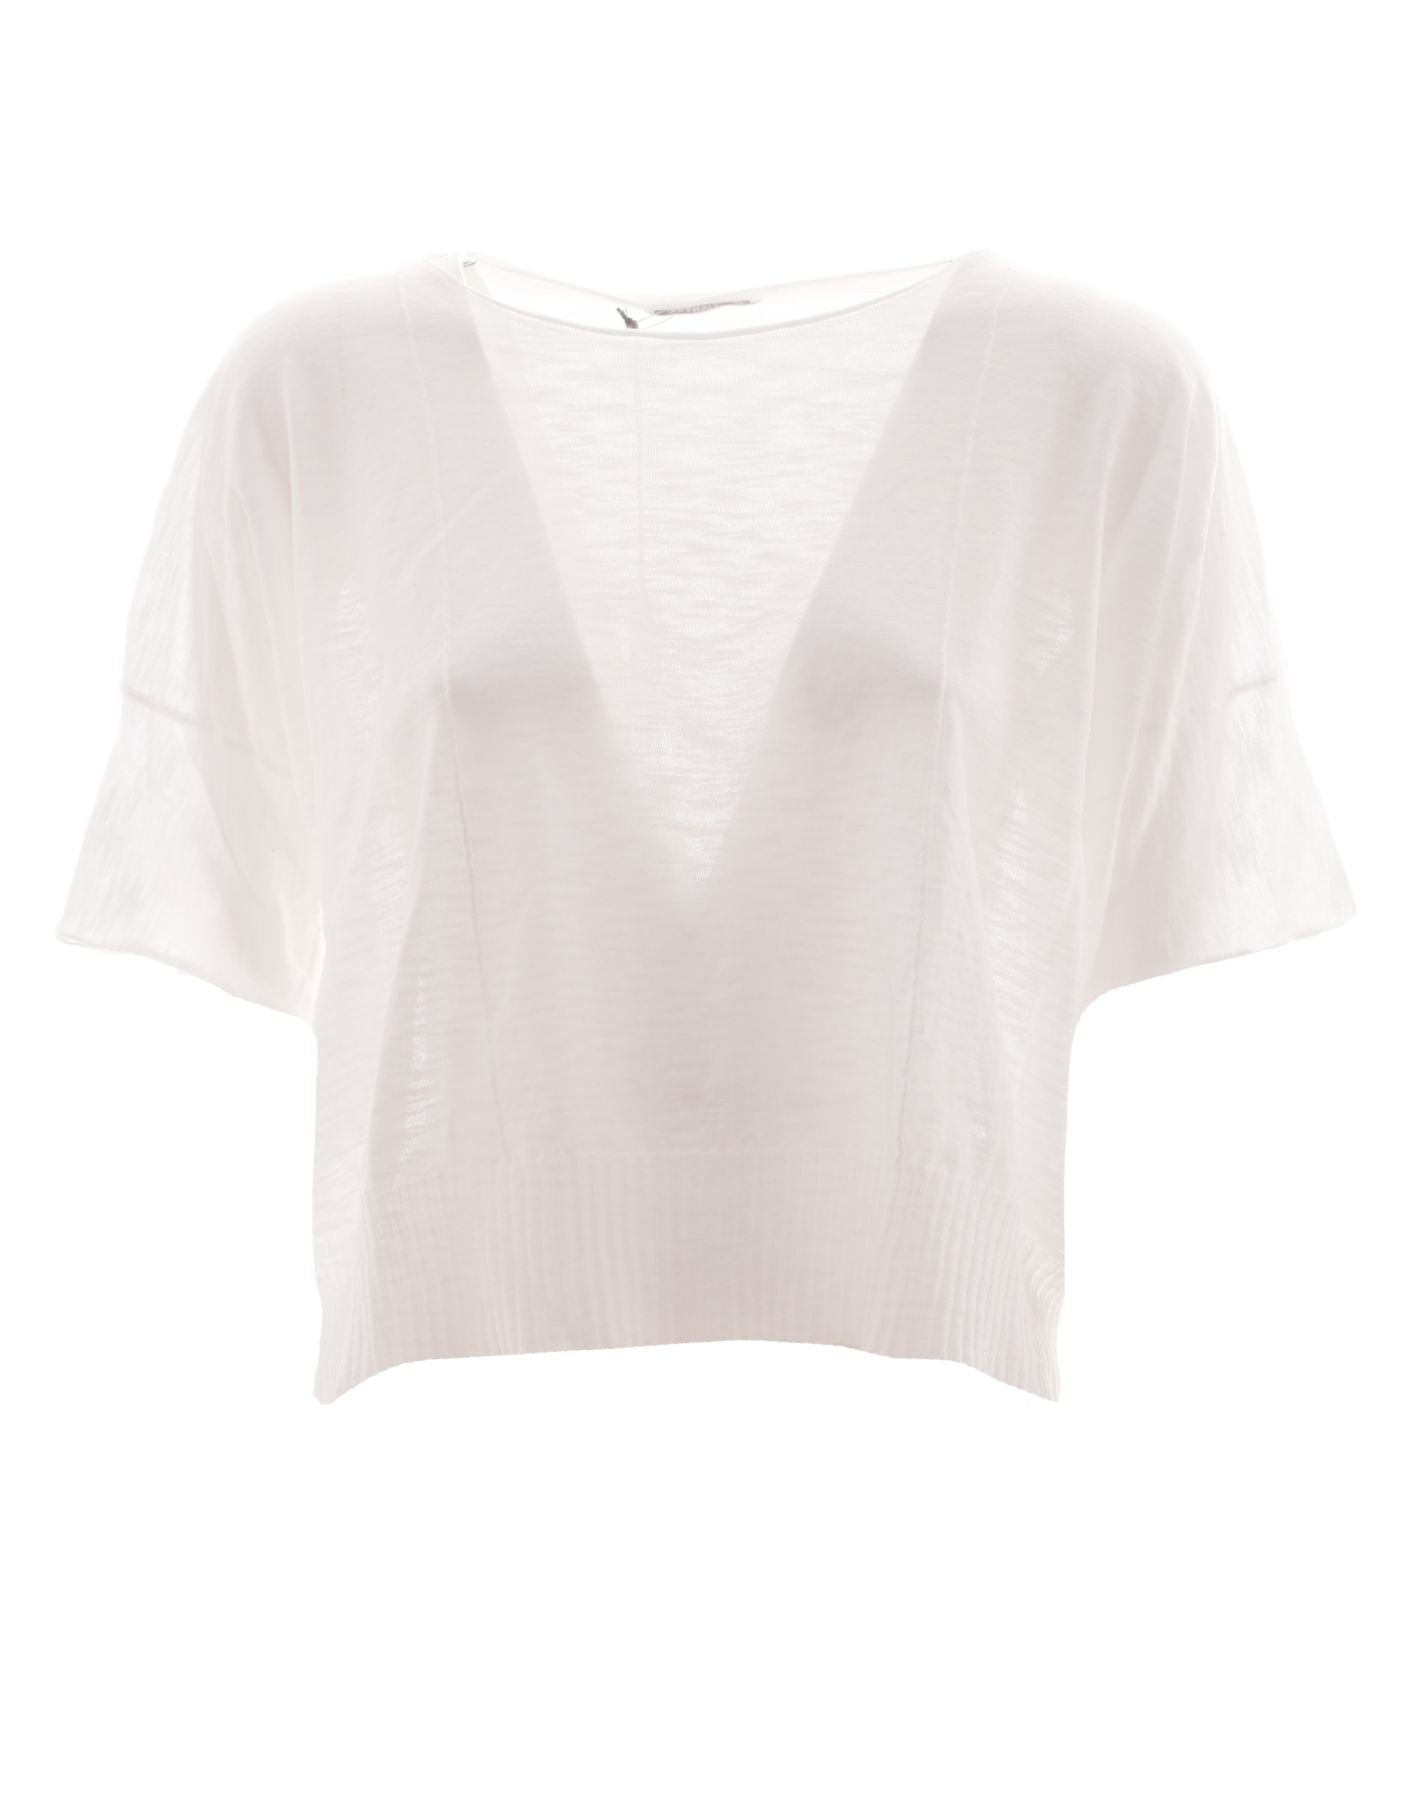 T-shirt woman CFDTRW5403 00 WHITE TRANSIT